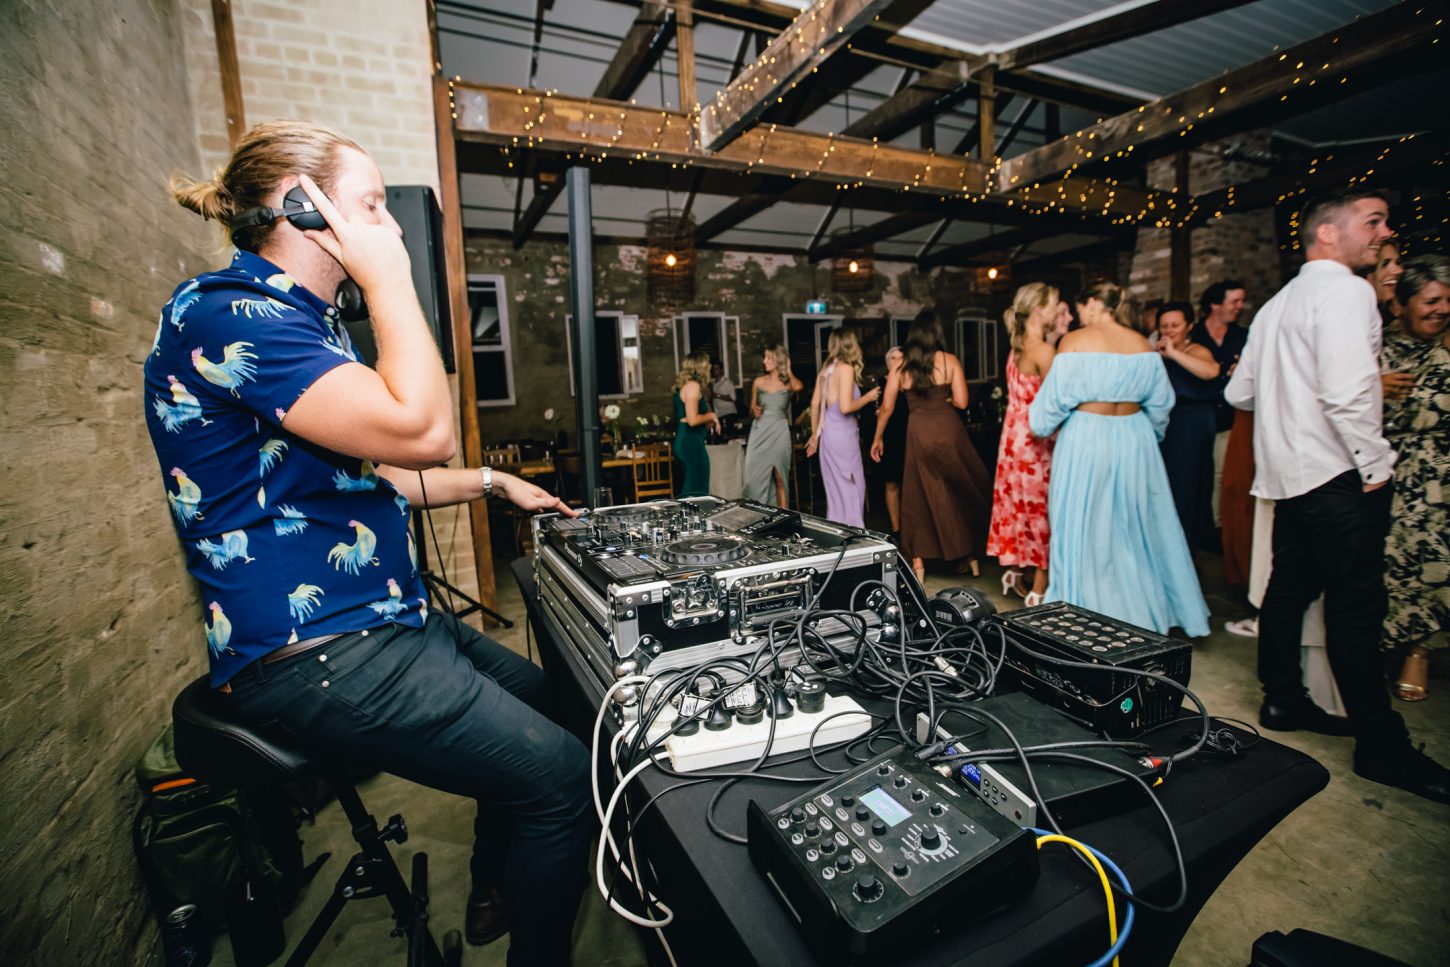 A DJ performing at a wedding